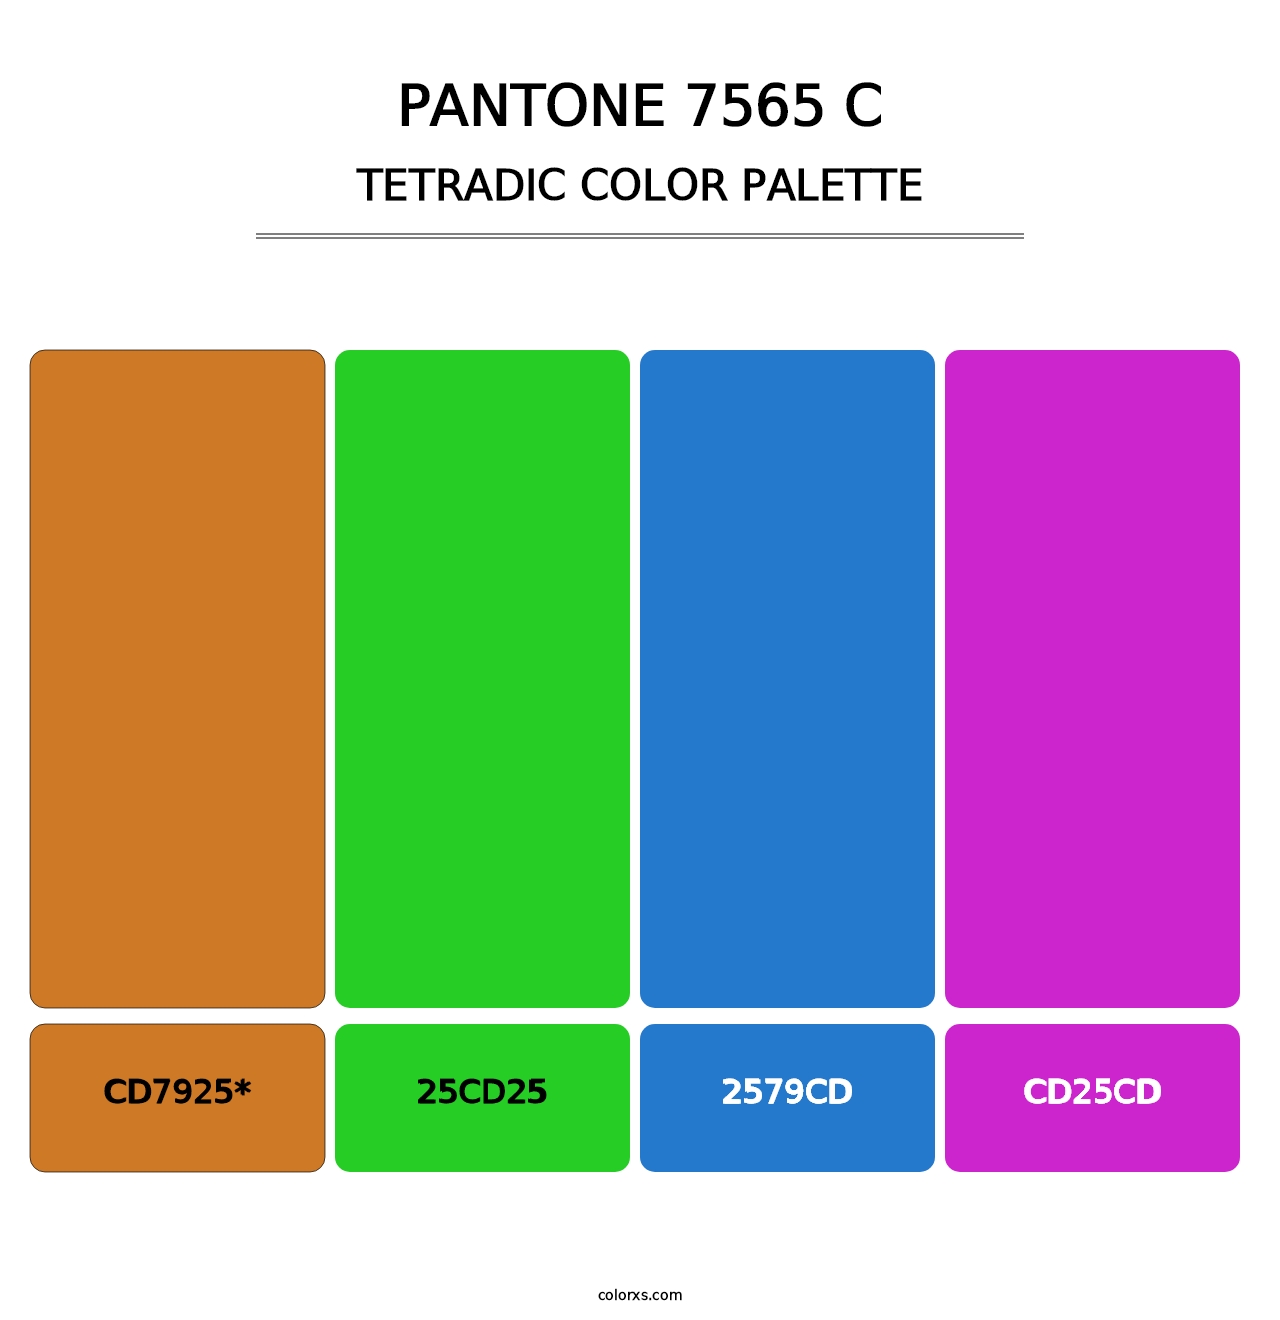 PANTONE 7565 C - Tetradic Color Palette